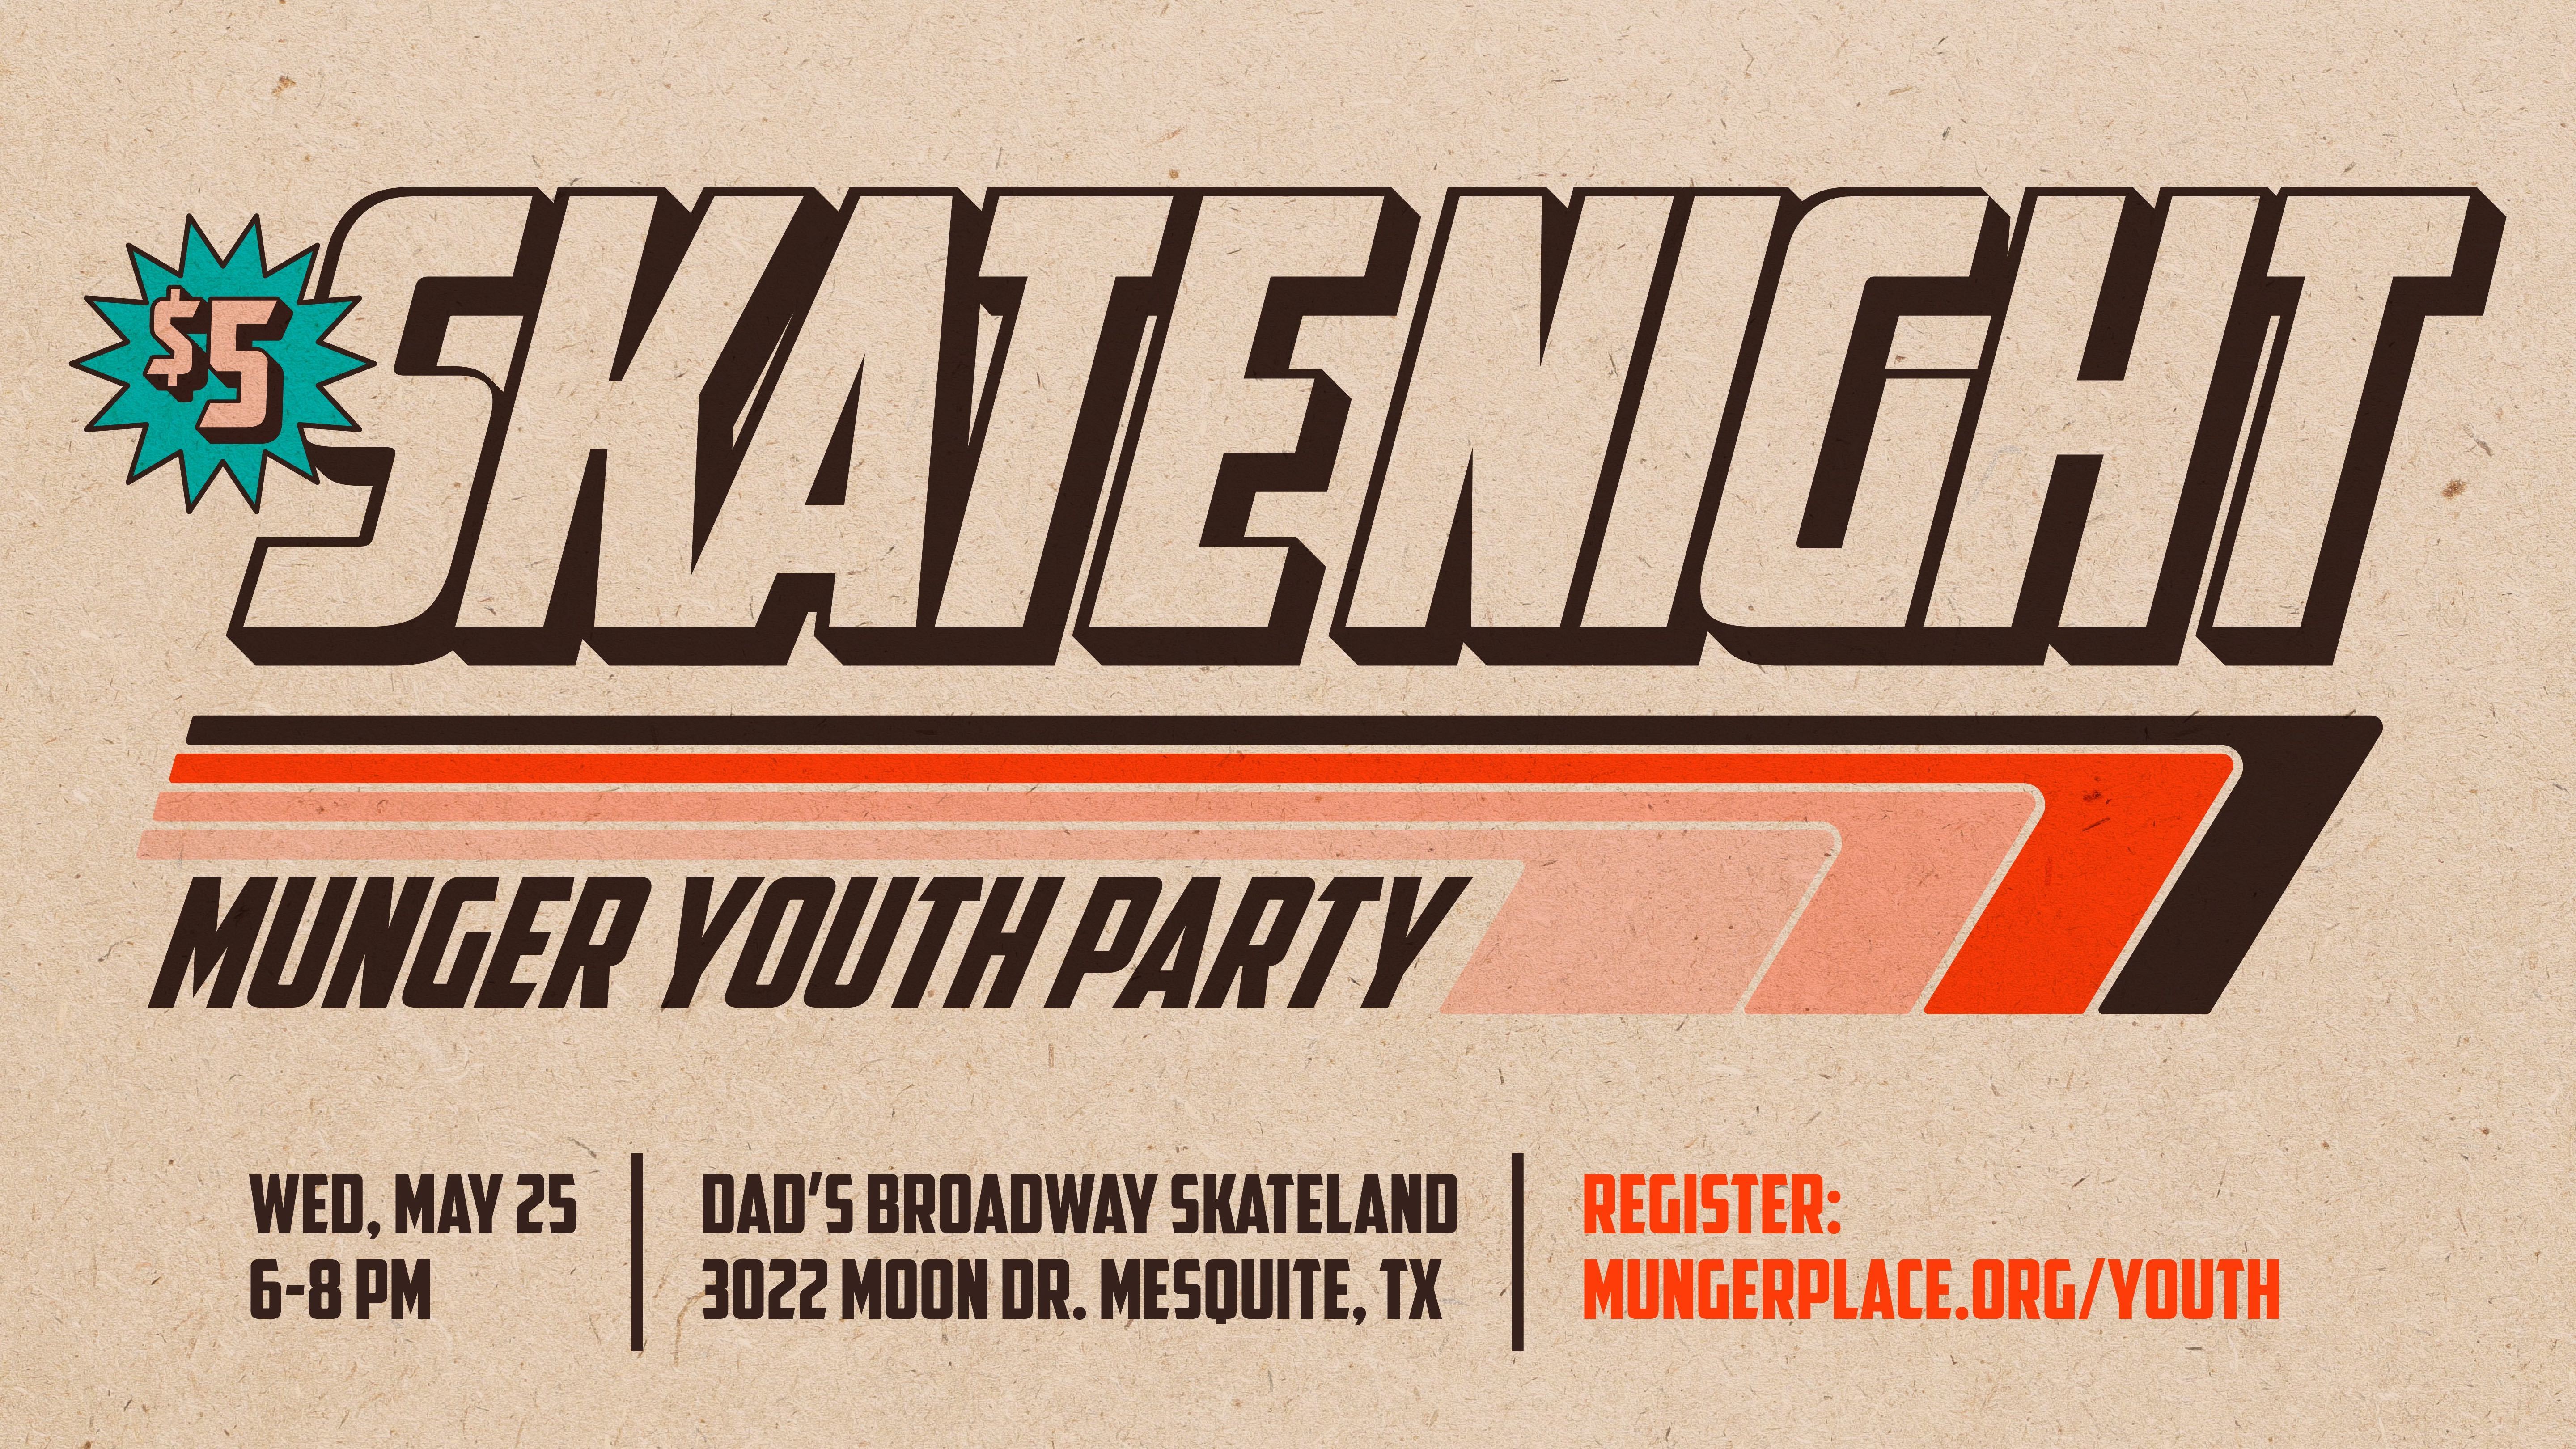 Mpc youth skate night digital banner 3x 100